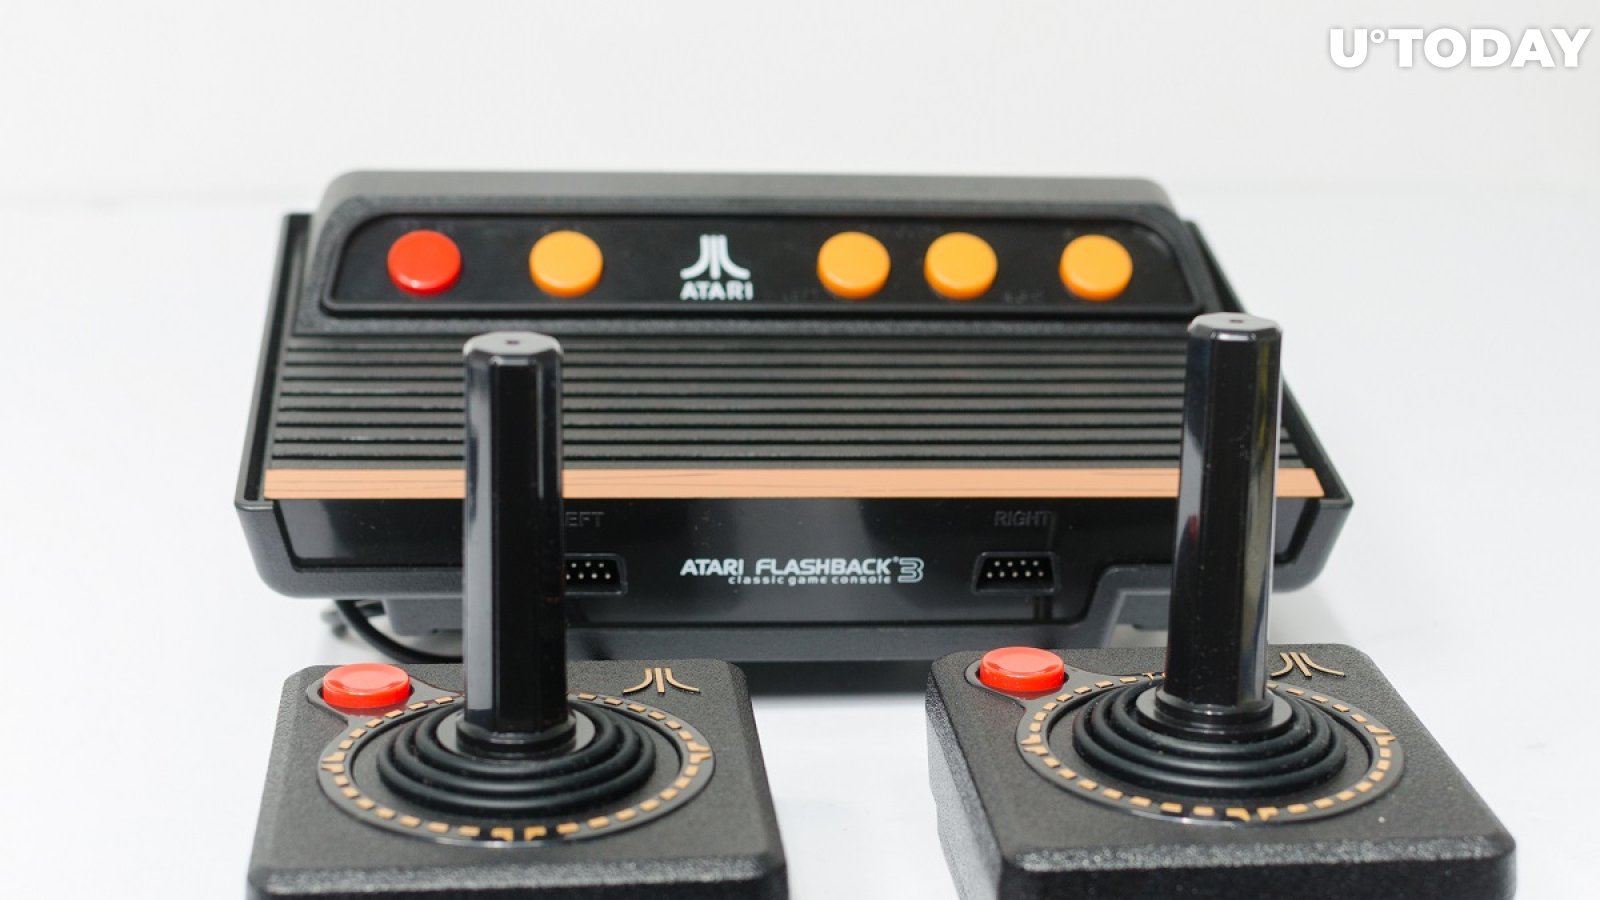 Legendary Game Developer Atari Partners with Litecoin Foundation